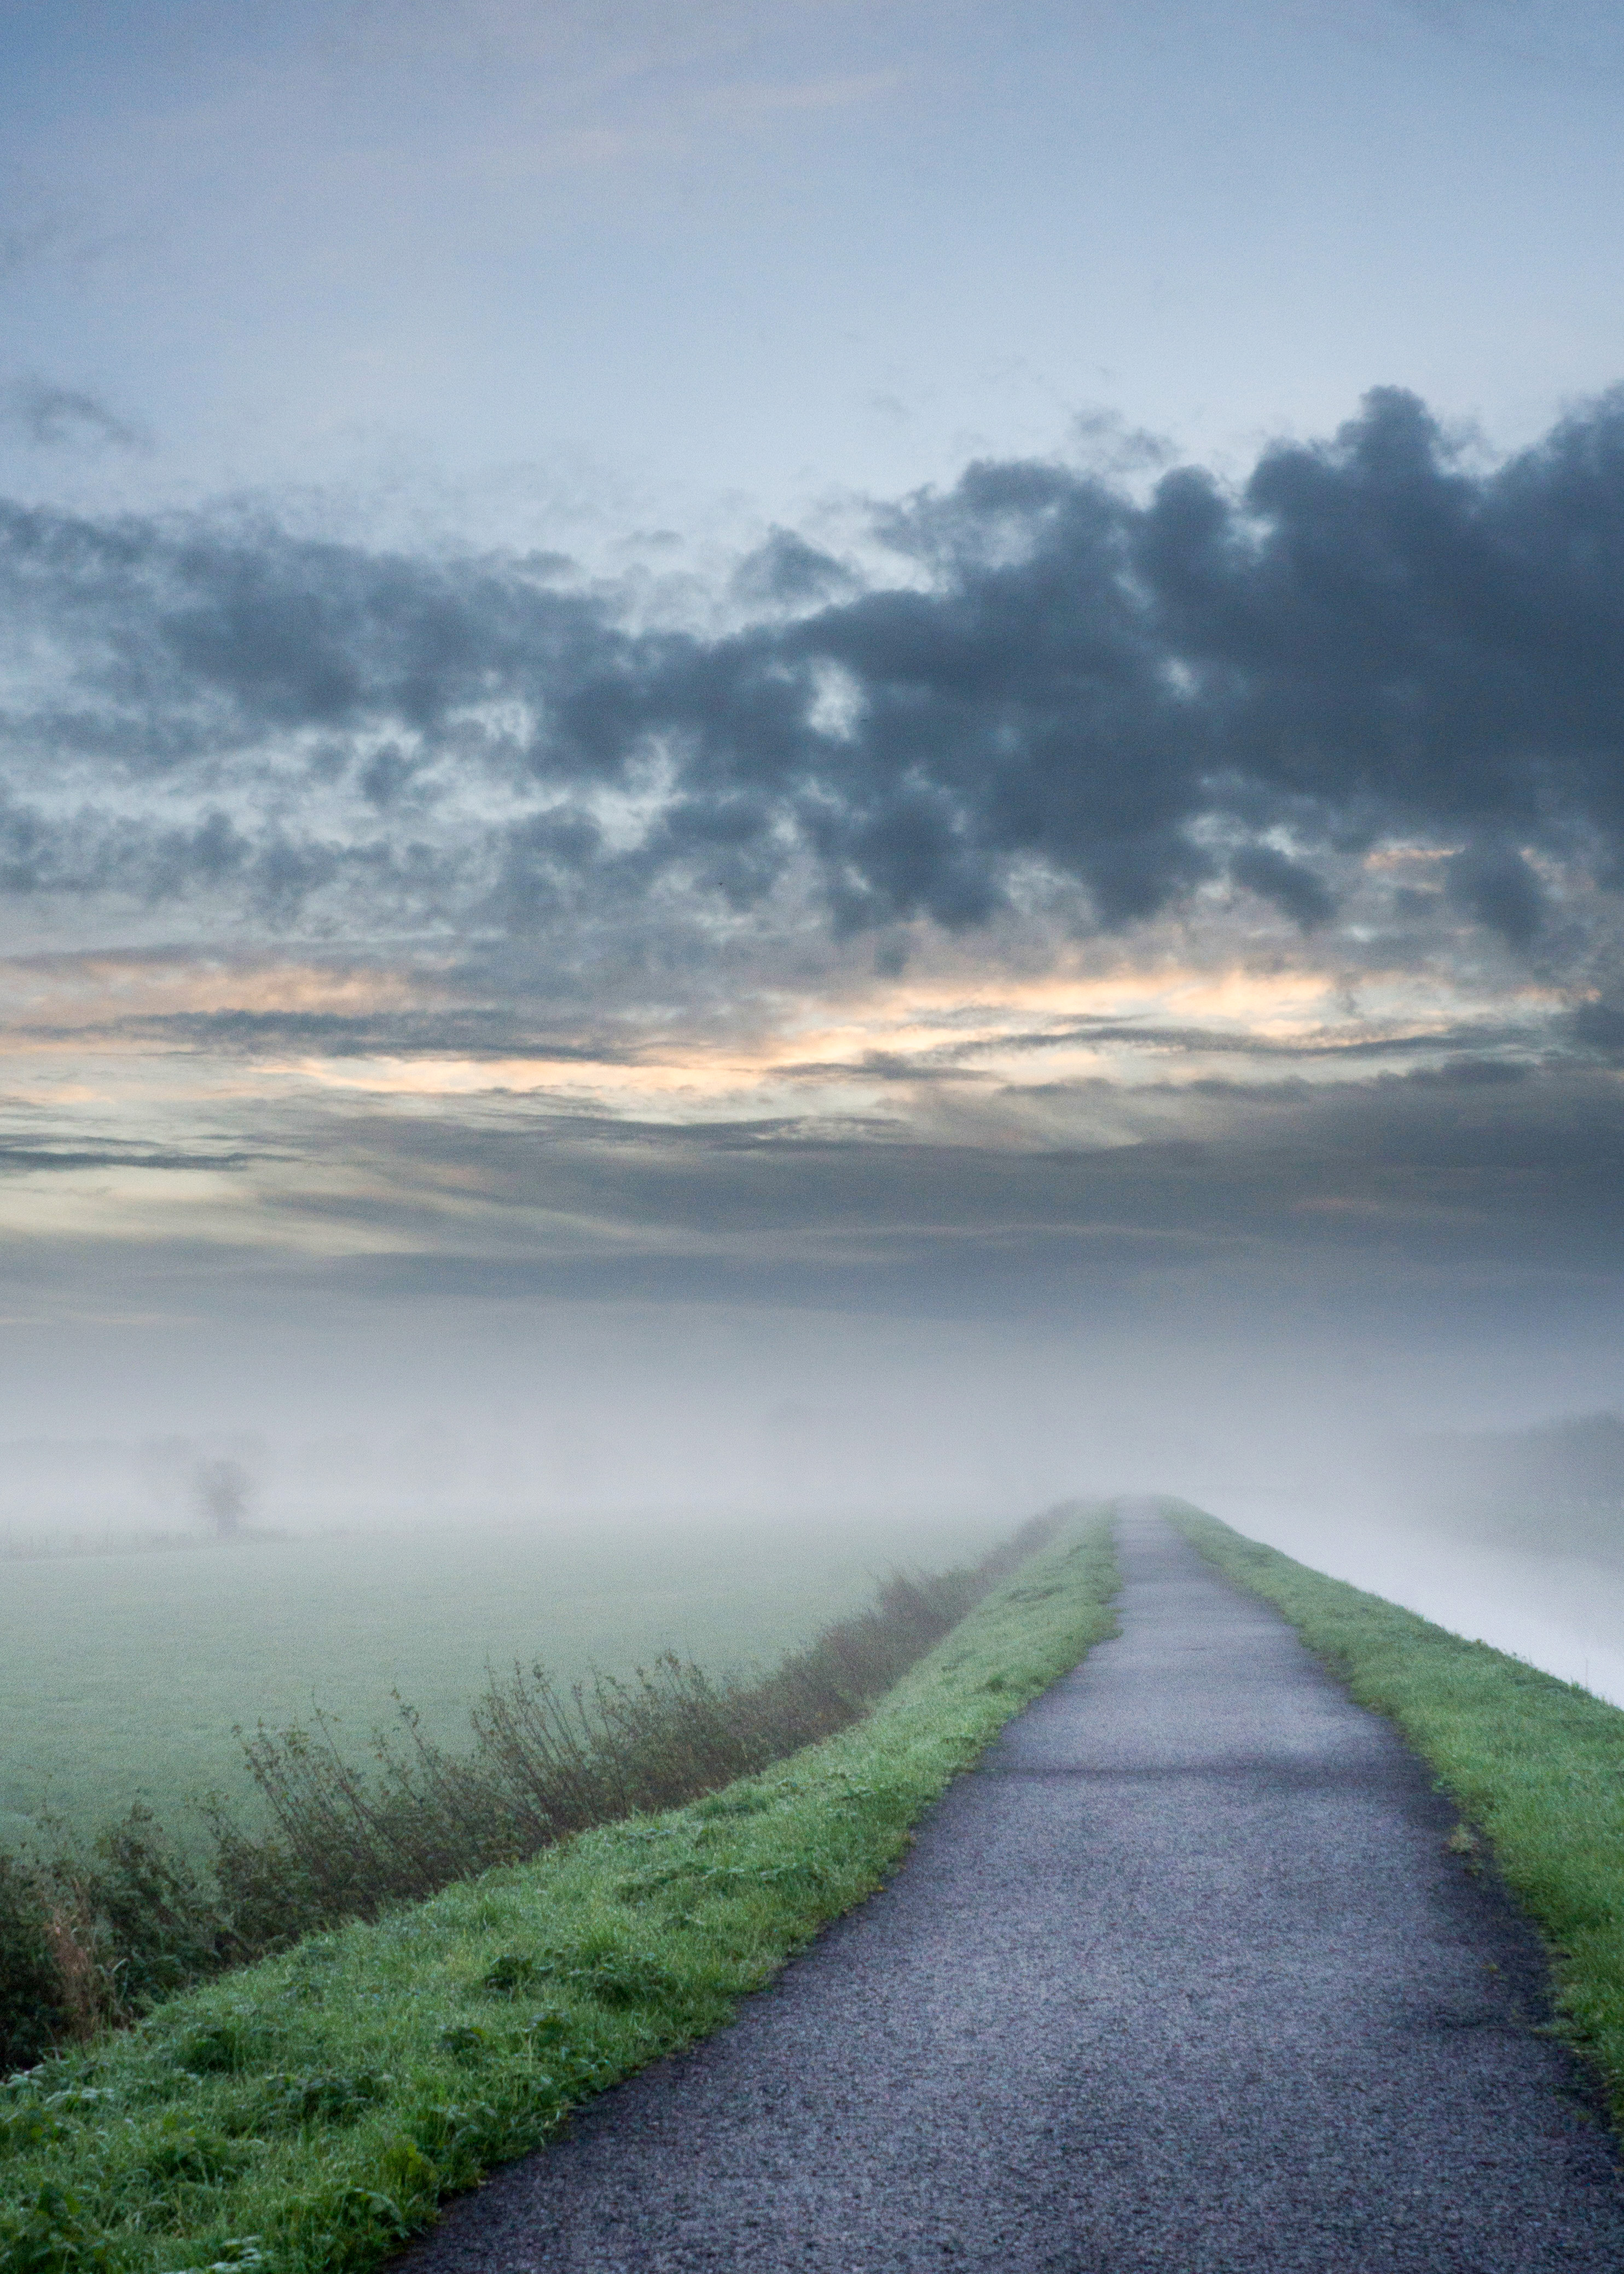 Foggy Path landscape image - Free stock photo - Public Domain photo - CC0 Images